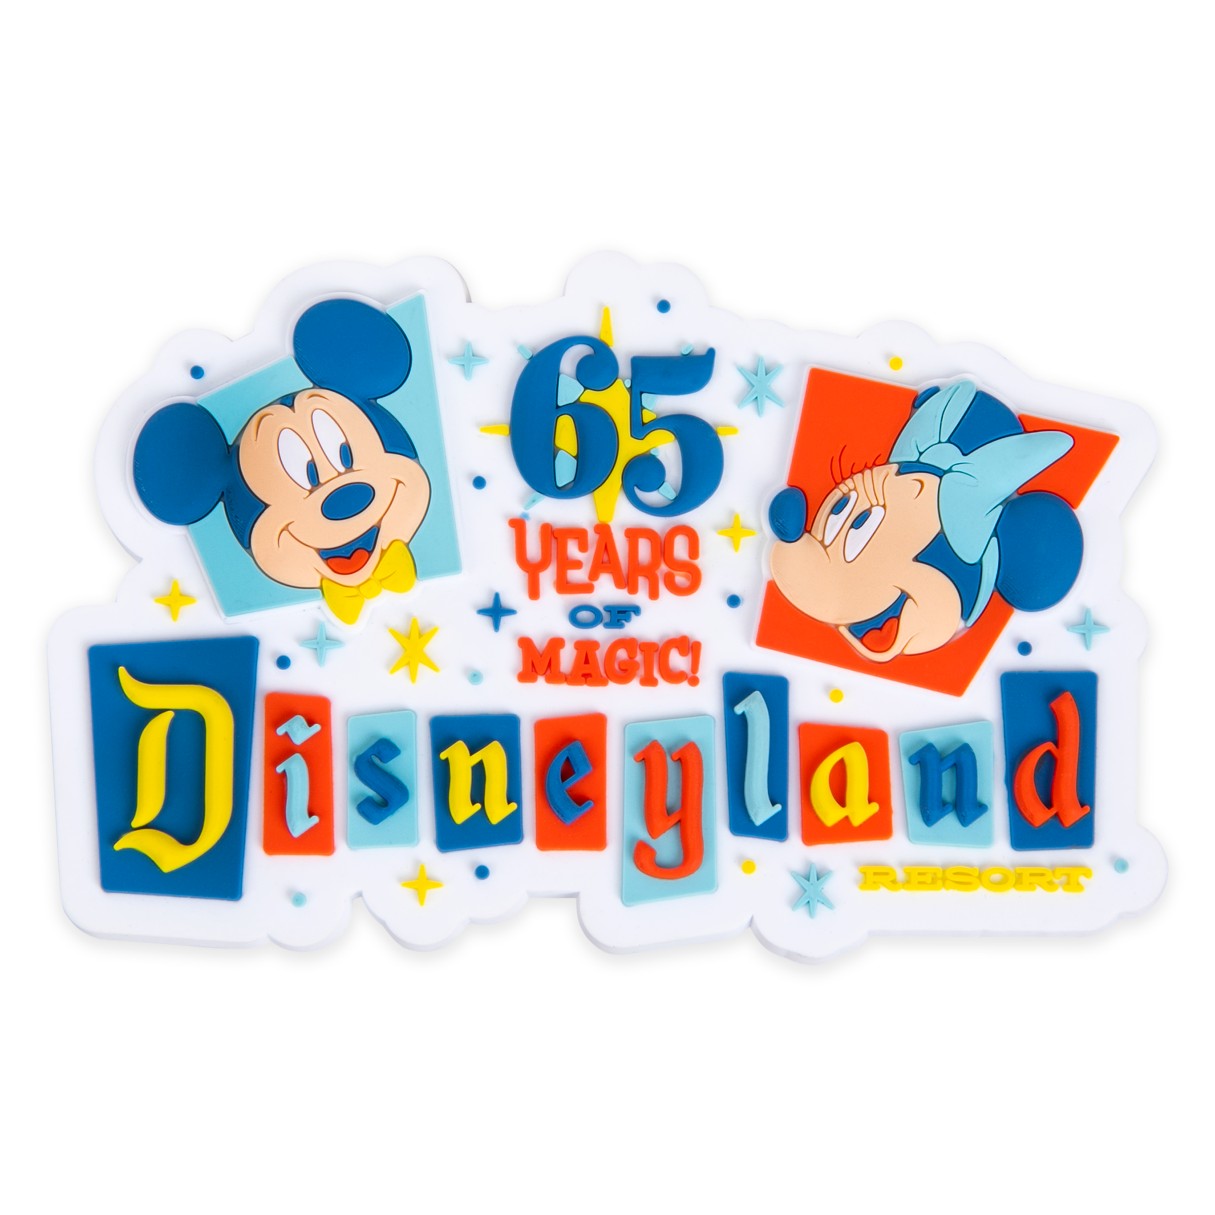 Disneyland 65th Anniversary Magnet